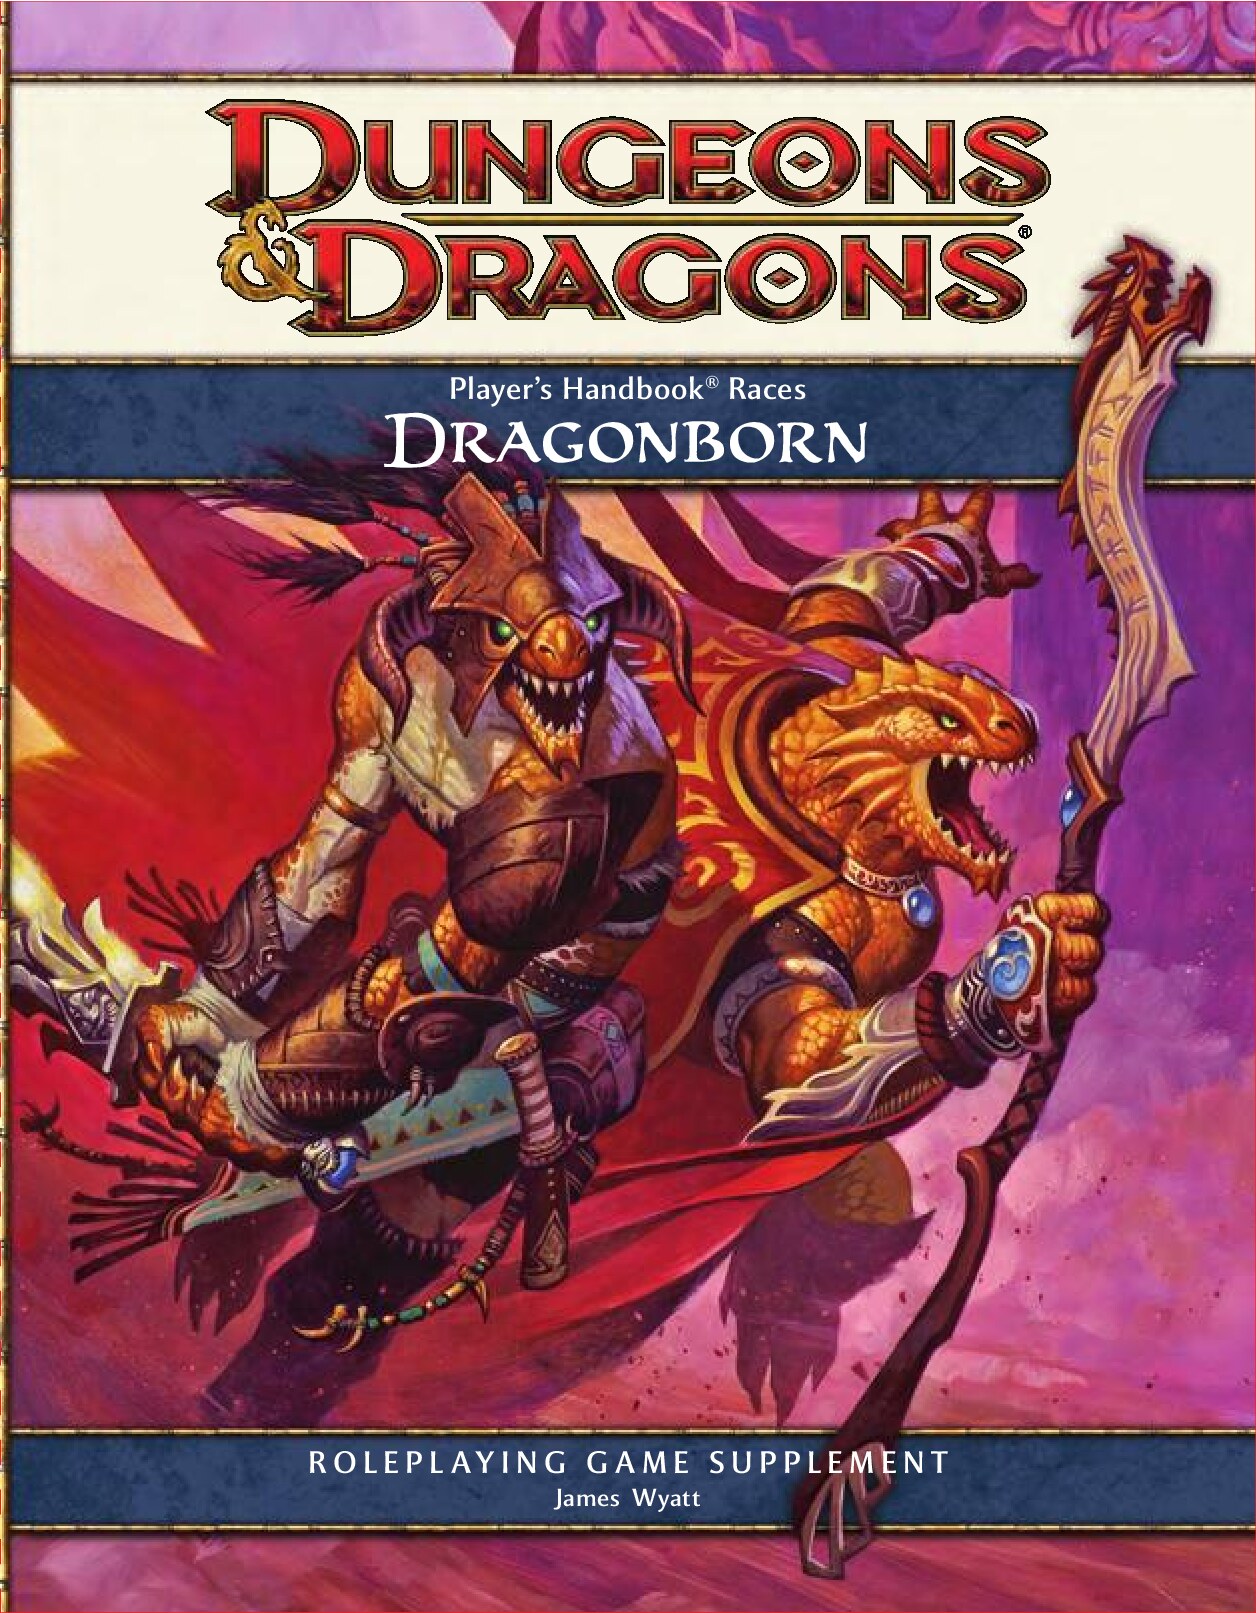 Players Handbook Races - Dragonborn